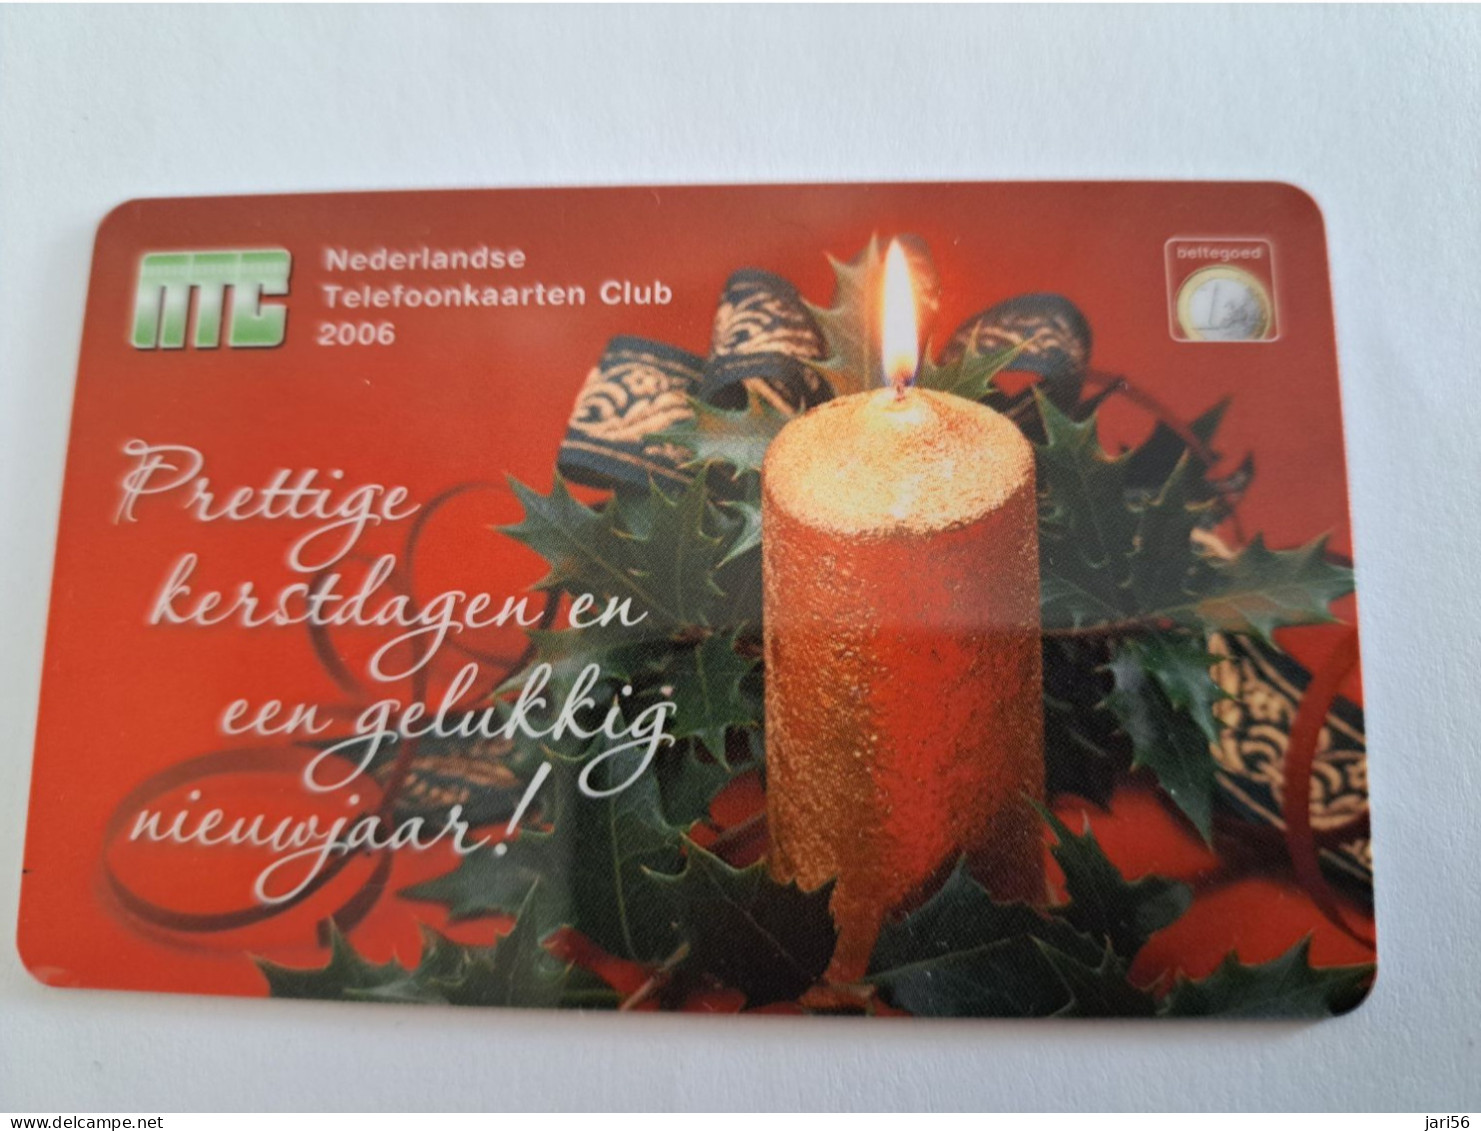 NETHERLANDS /  PREPAID/ NTC CLUB/ MEMBERCARD 2006/  €  1,-   - MINT  CARD  ** 13952** - Public